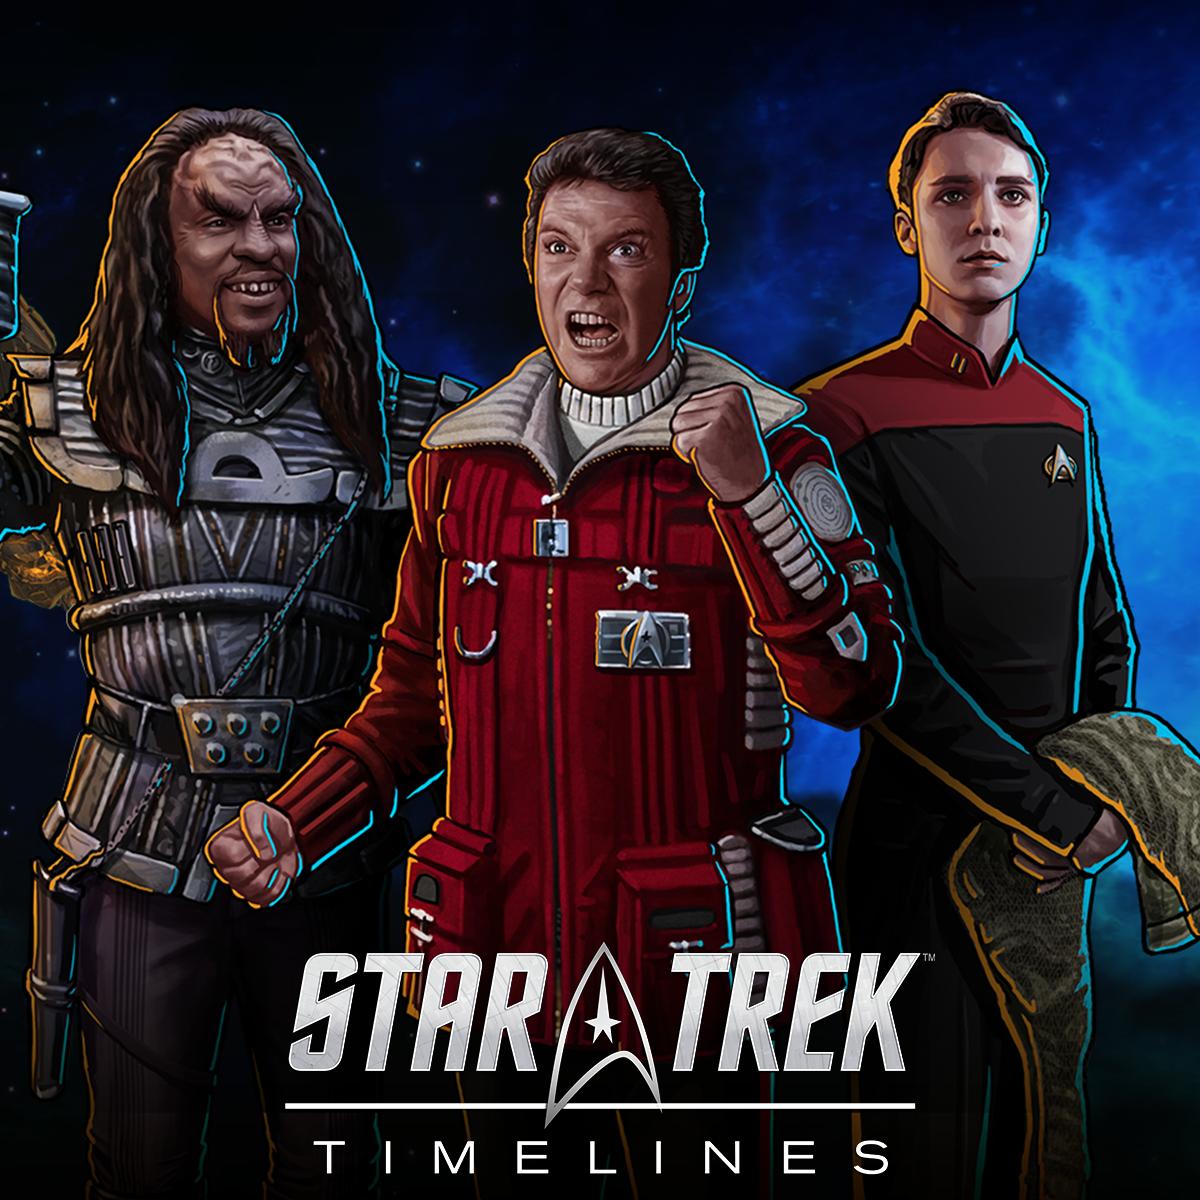 Star Trek Timelines Events